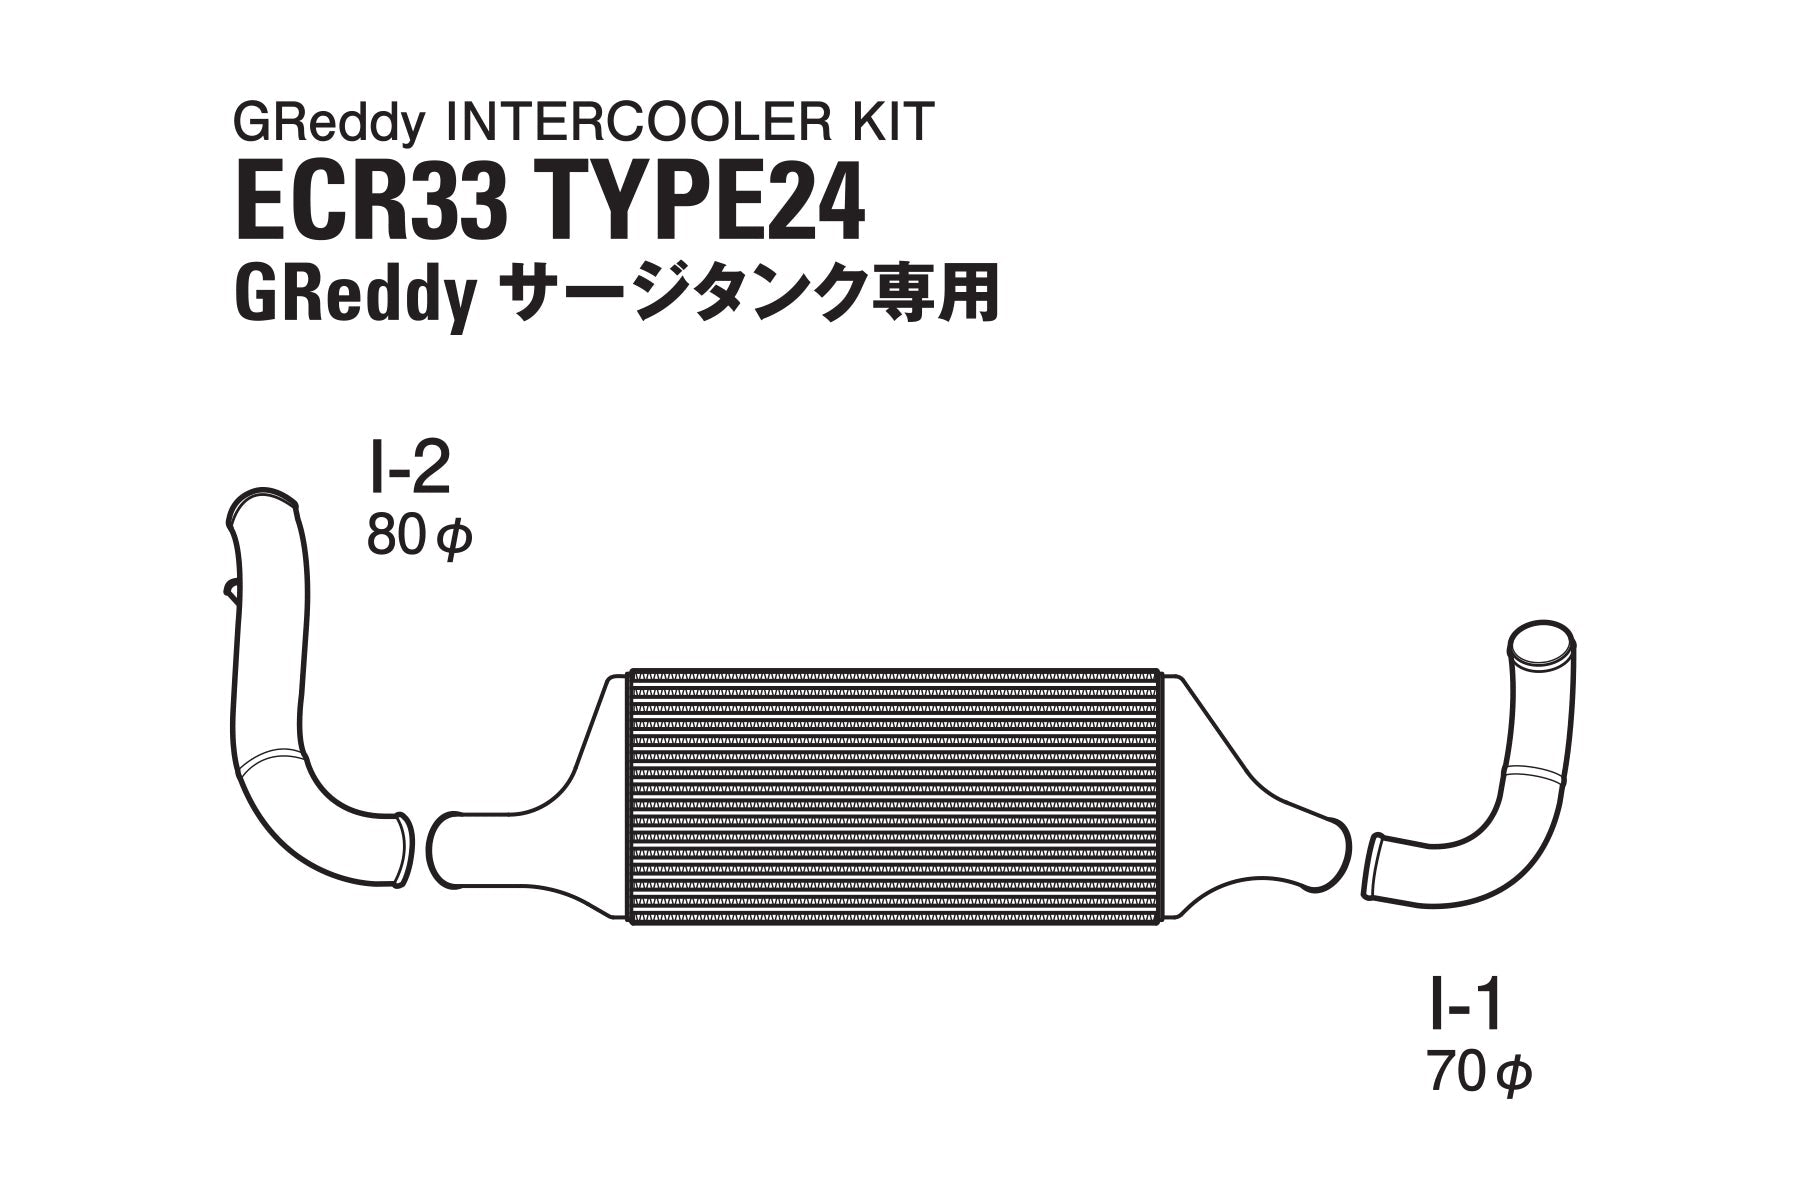 GREDDY INTERCOOLER KIT T-24F ECR33 UPGRADED TURBO KIT - (12020213)